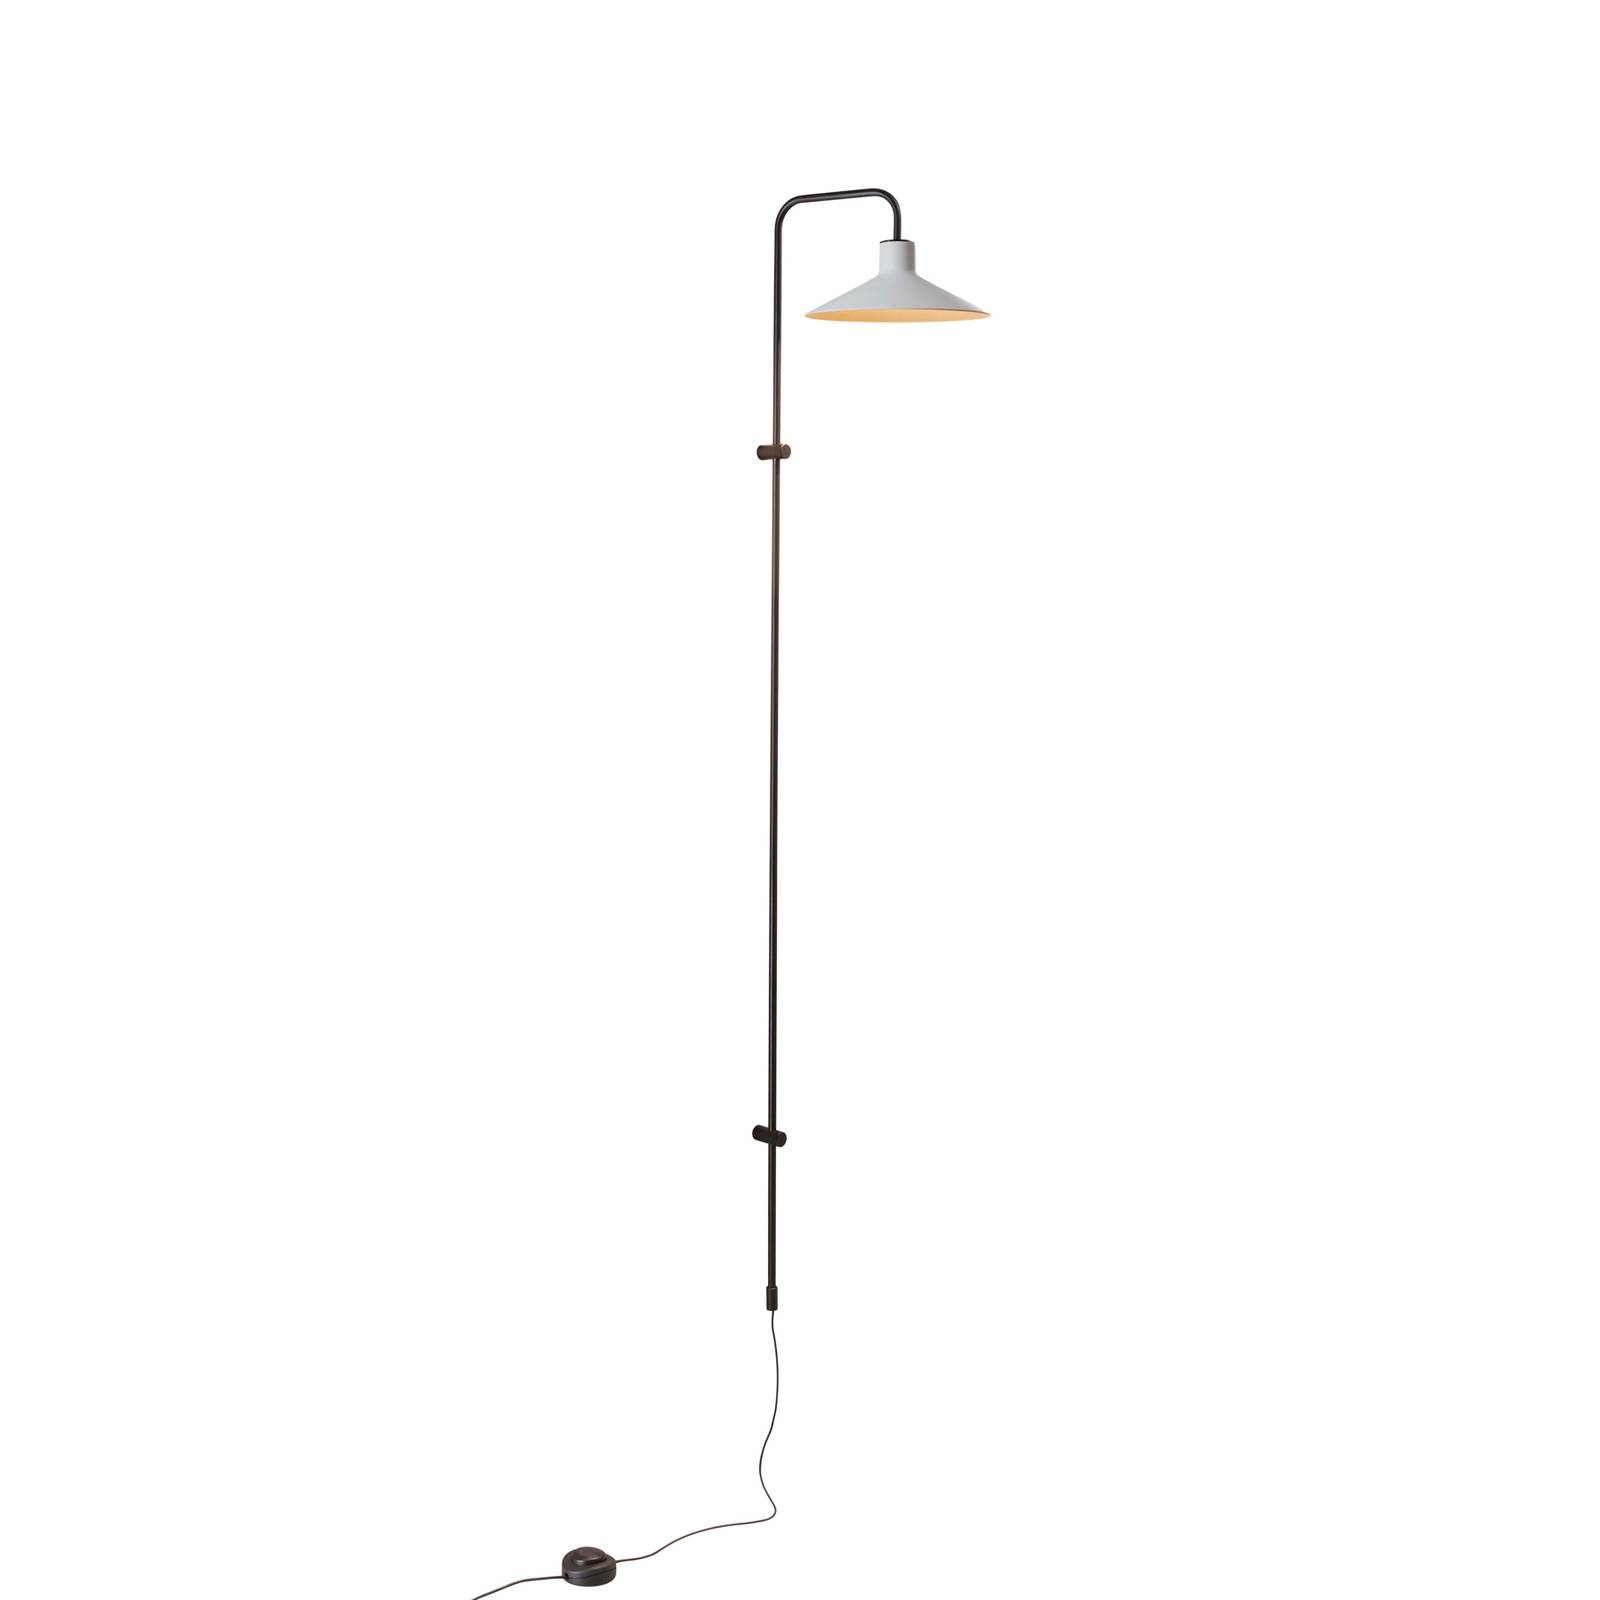 Bover Platet A05 LED-Wandlampe Dimmer, hellgrau